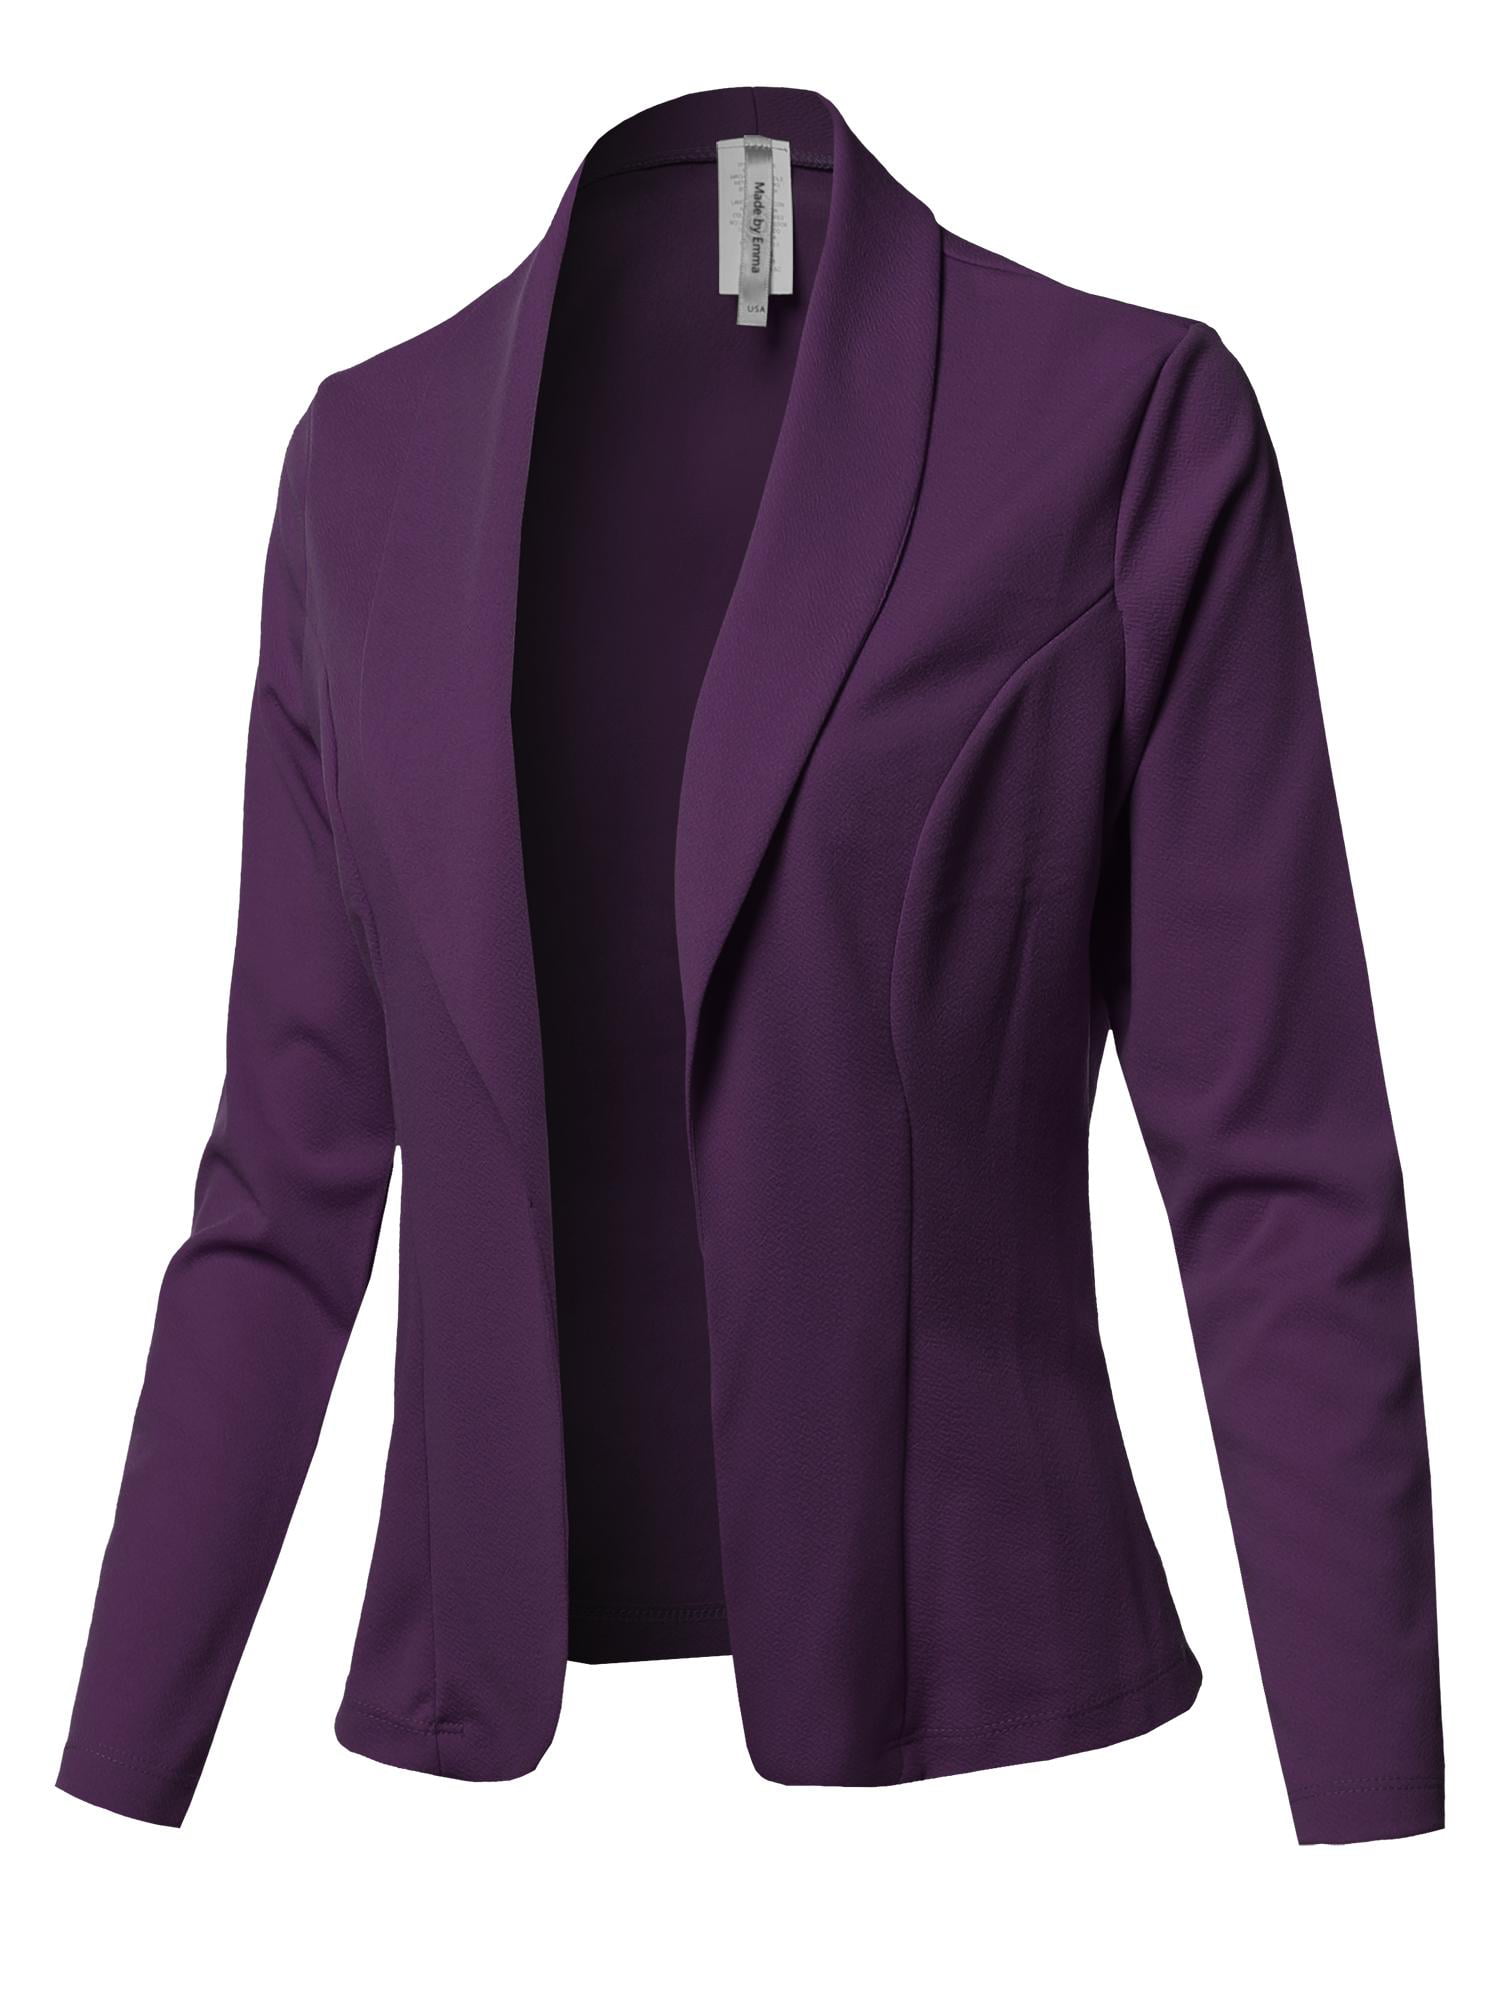 FashionOutfit Women's Solid Long sleeve Open Front Office Blazer Jacket ...